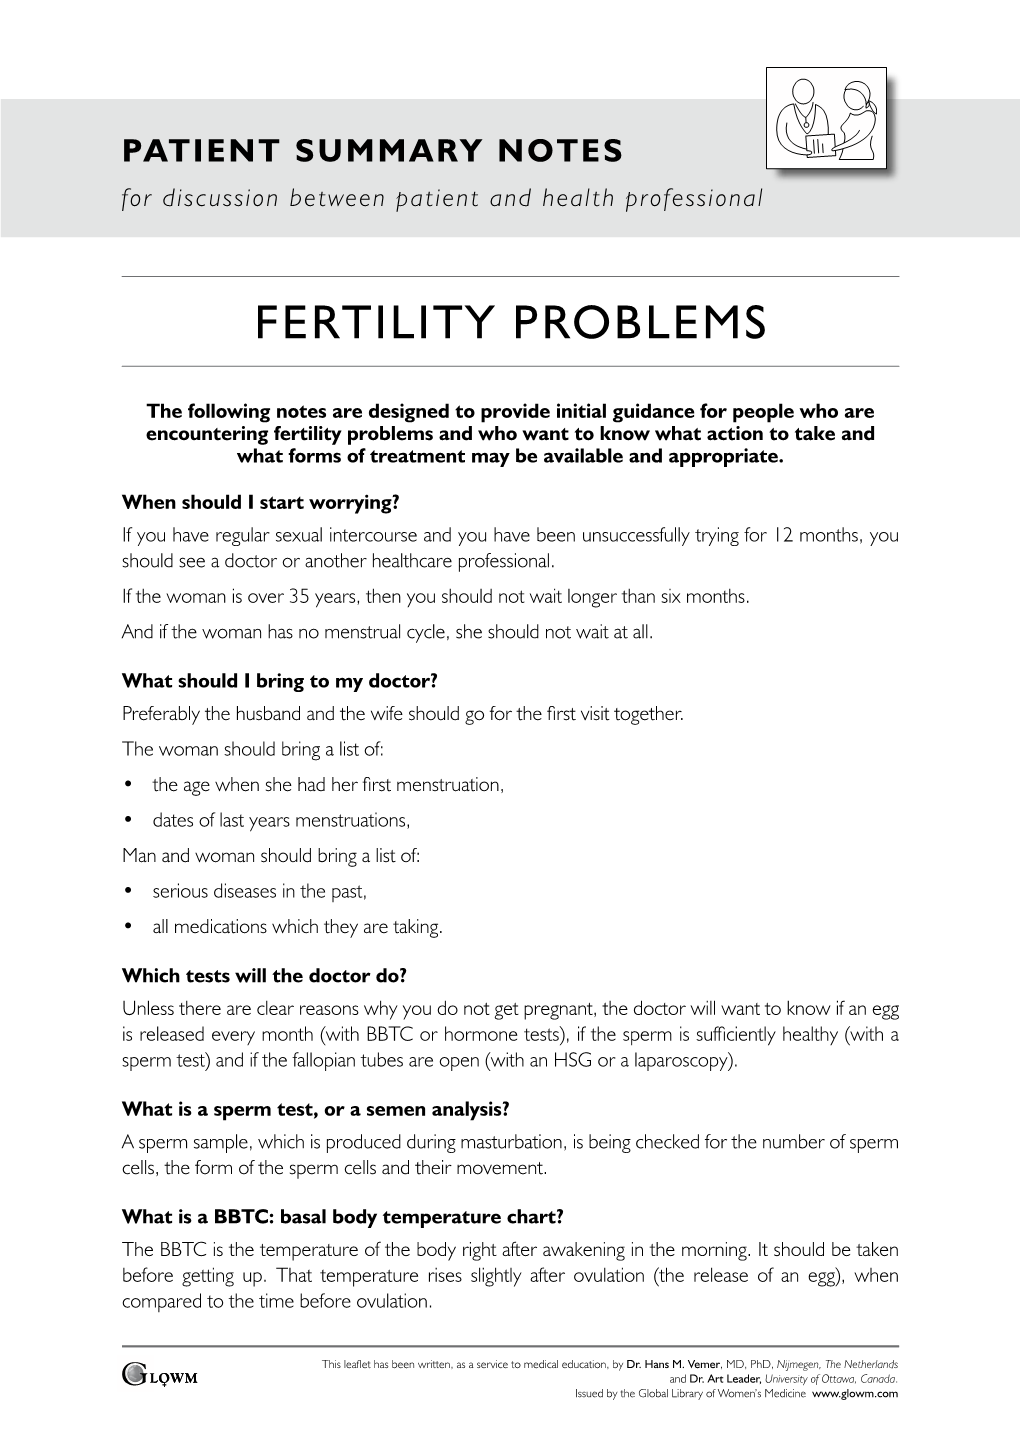 Fertility Problems